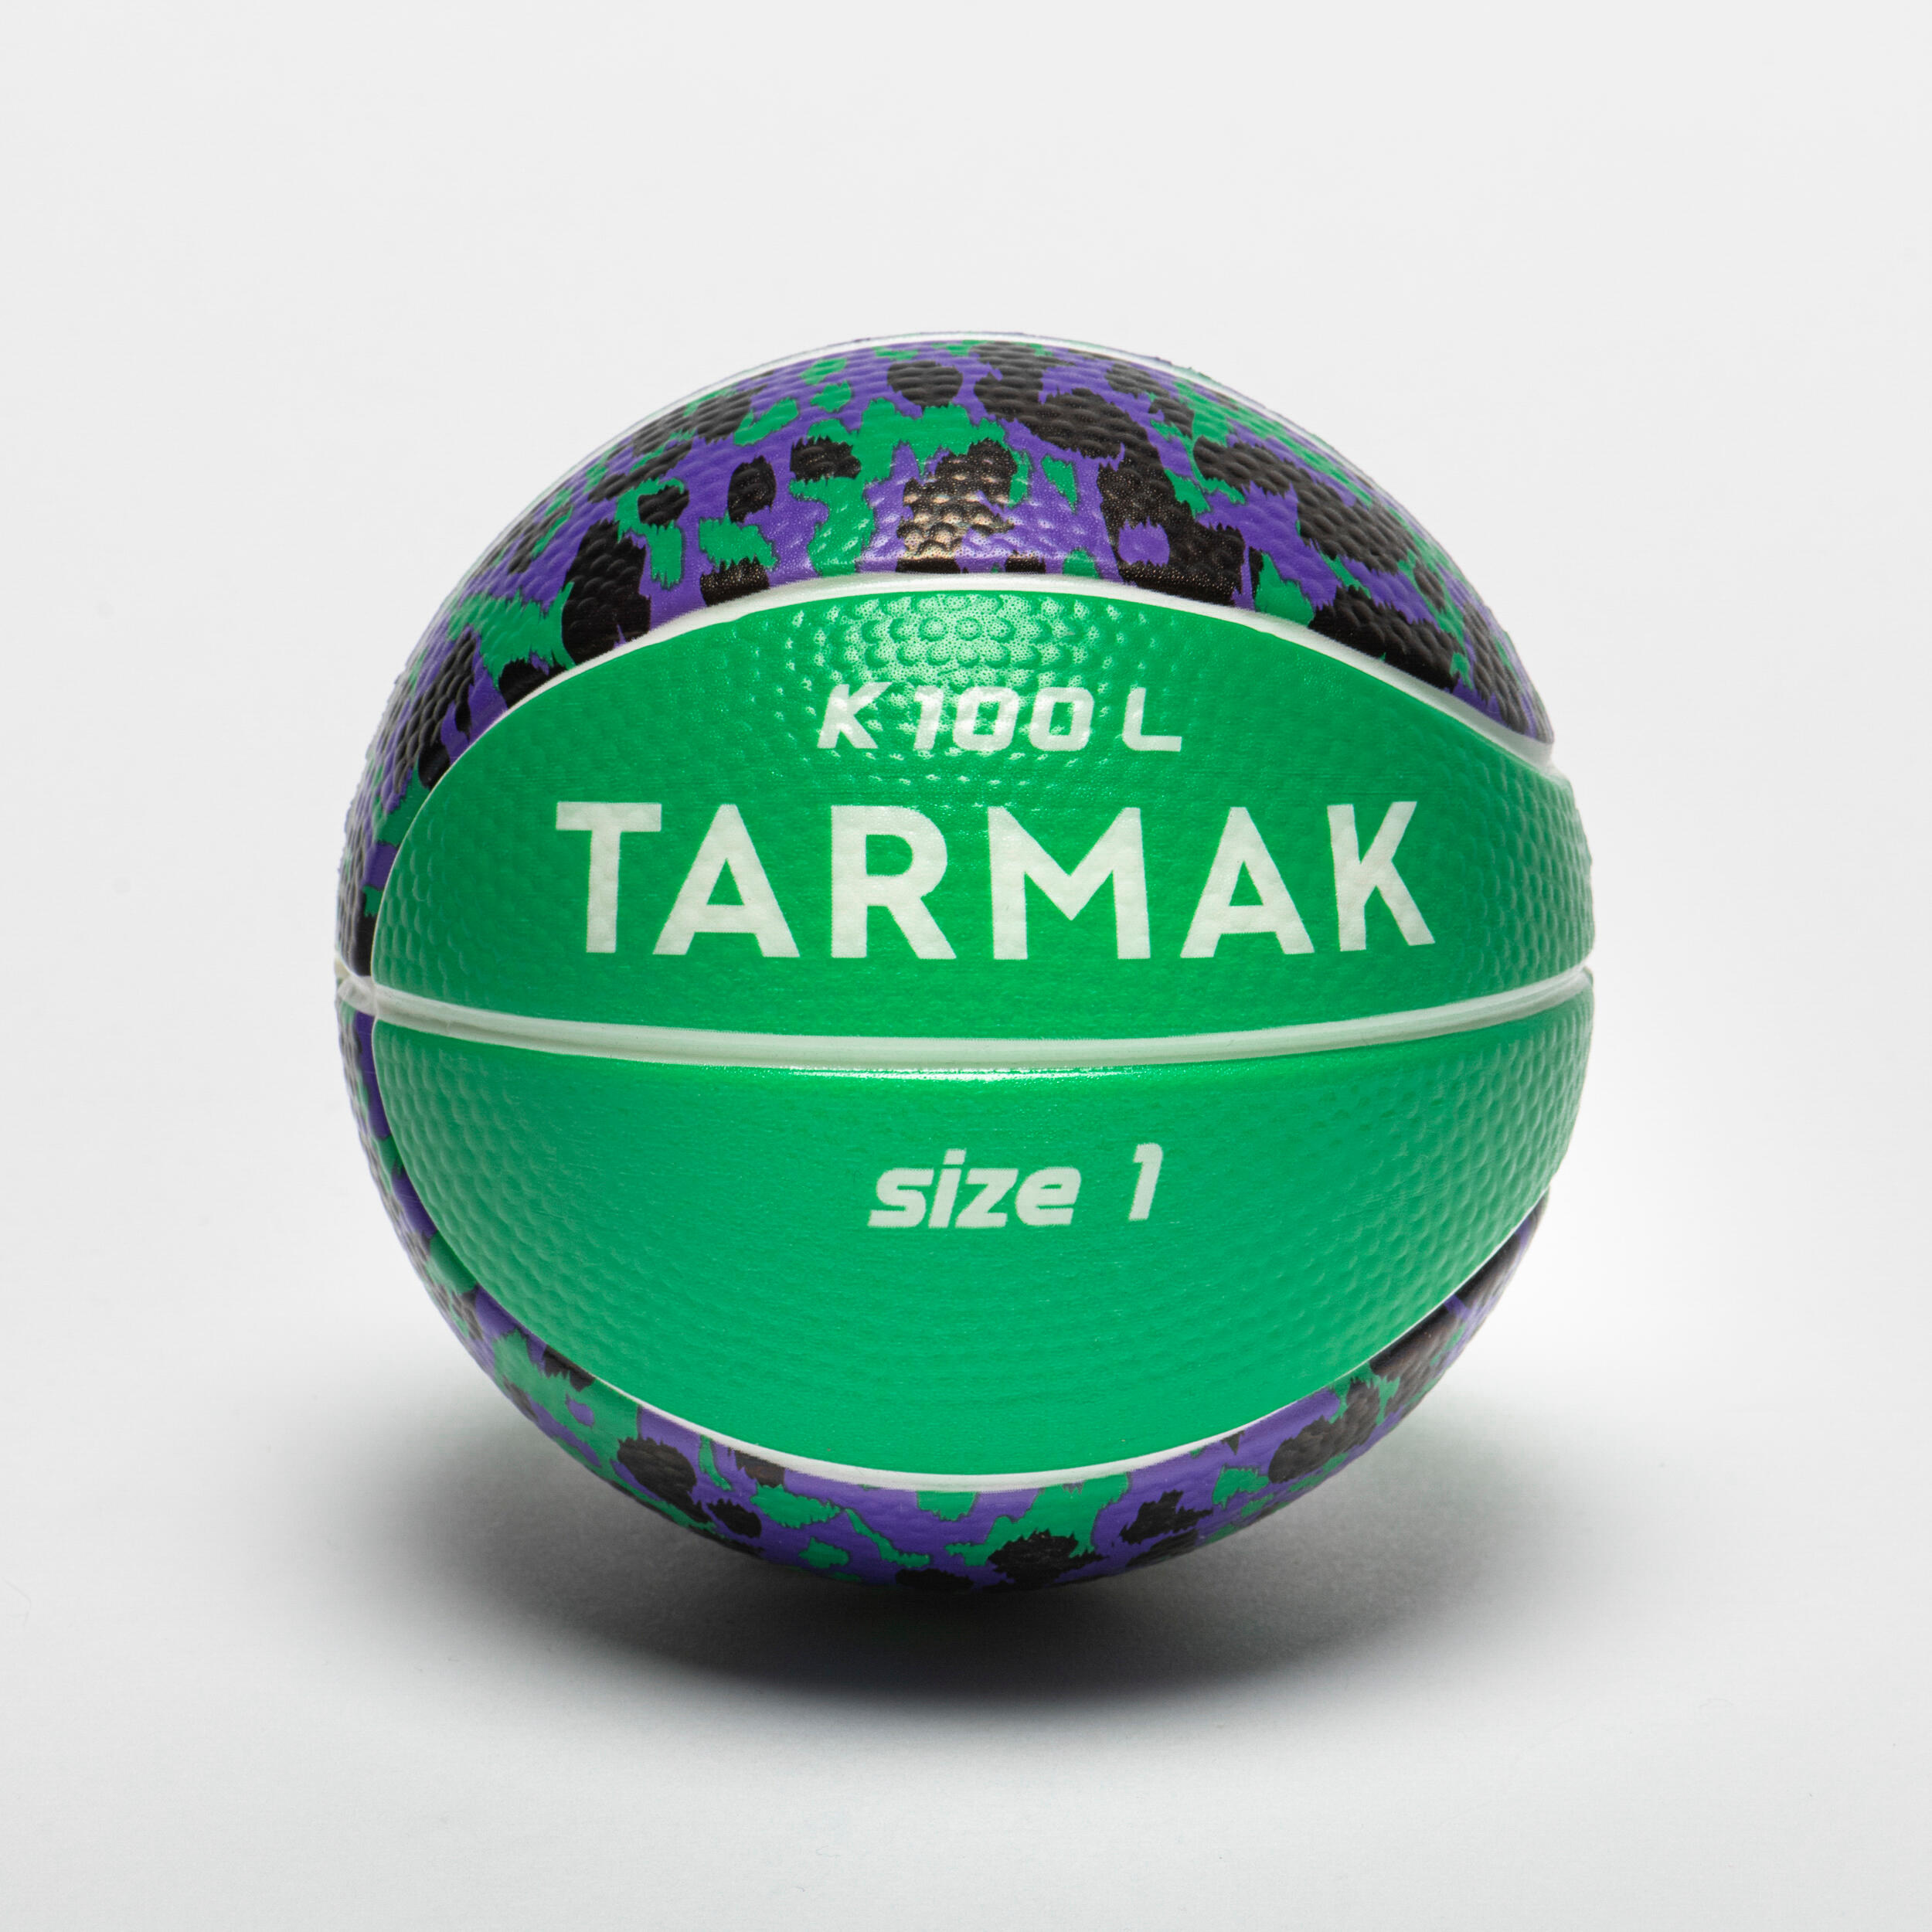 Kids' Mini Foam Basketball Size 1 K100 - Green/Black 1/5